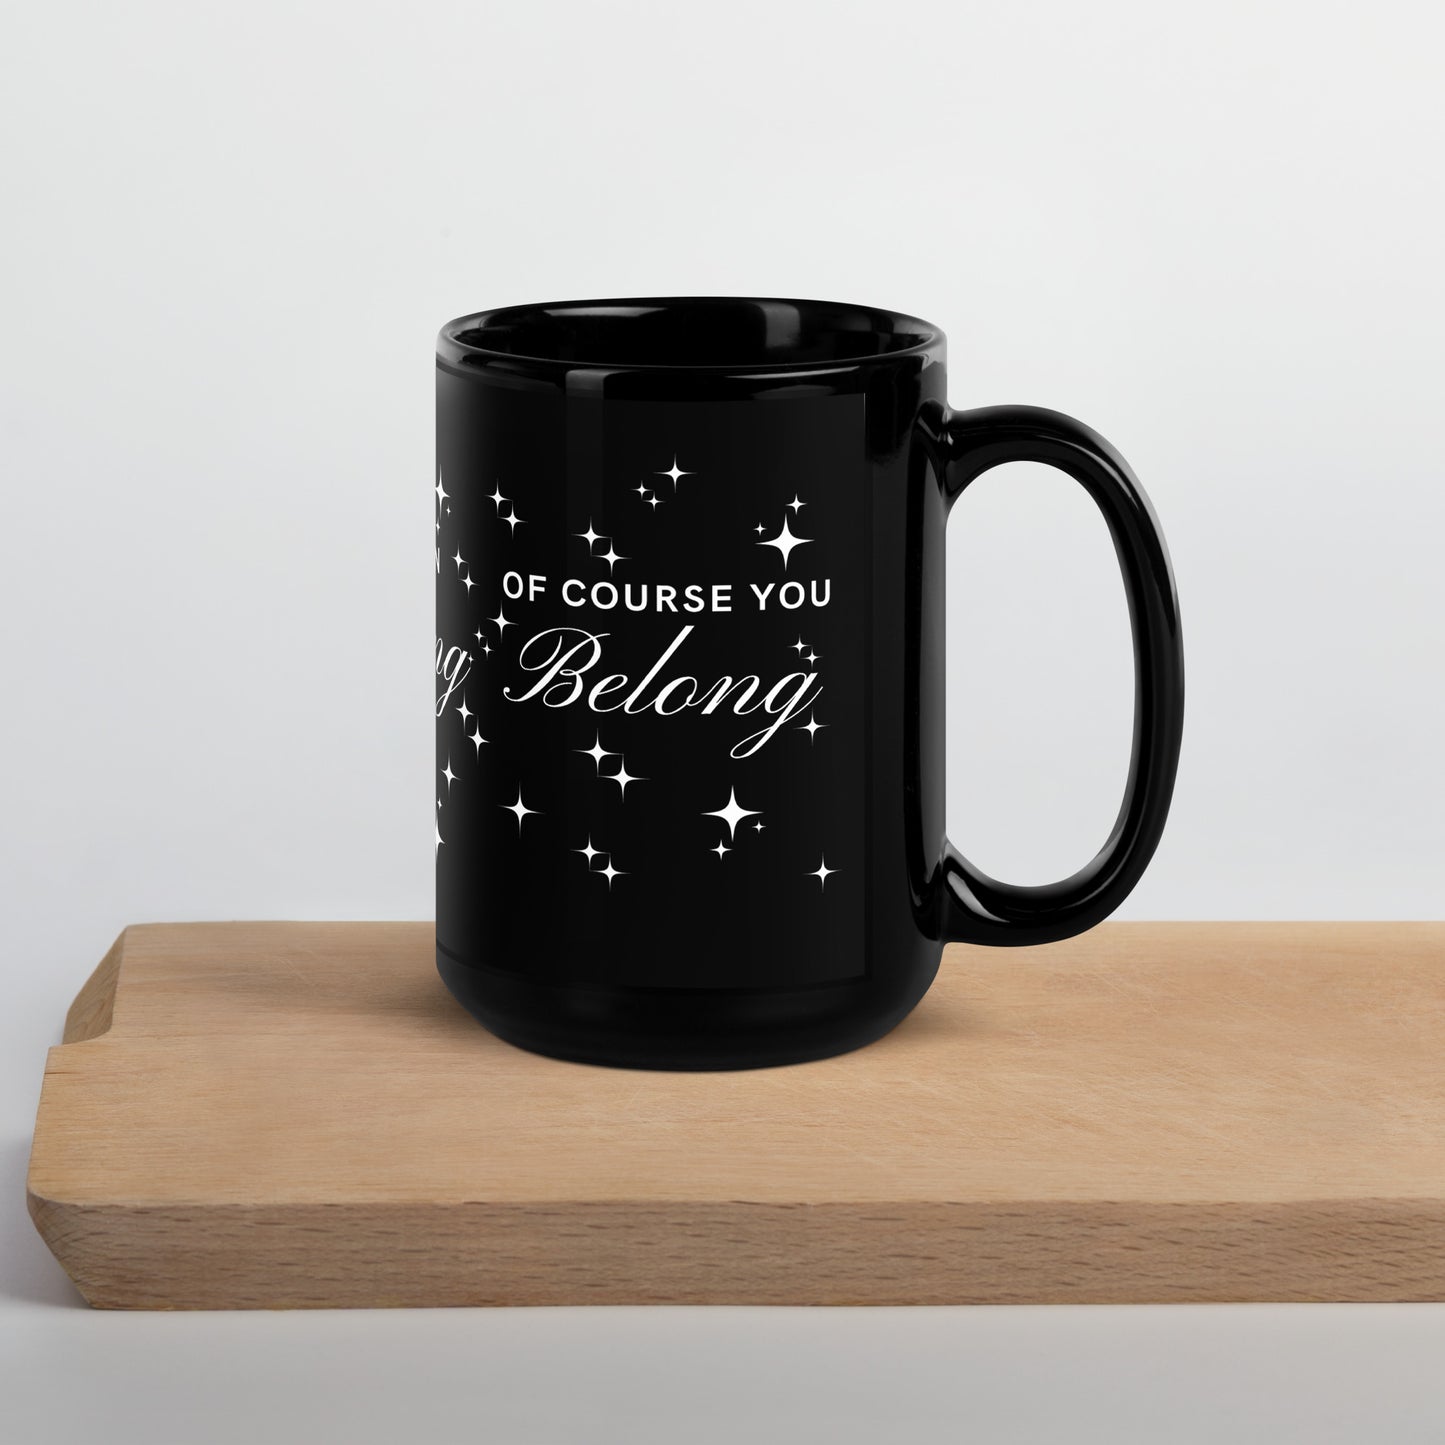 Earthling (You Belong) Inclusive Kindness Mug